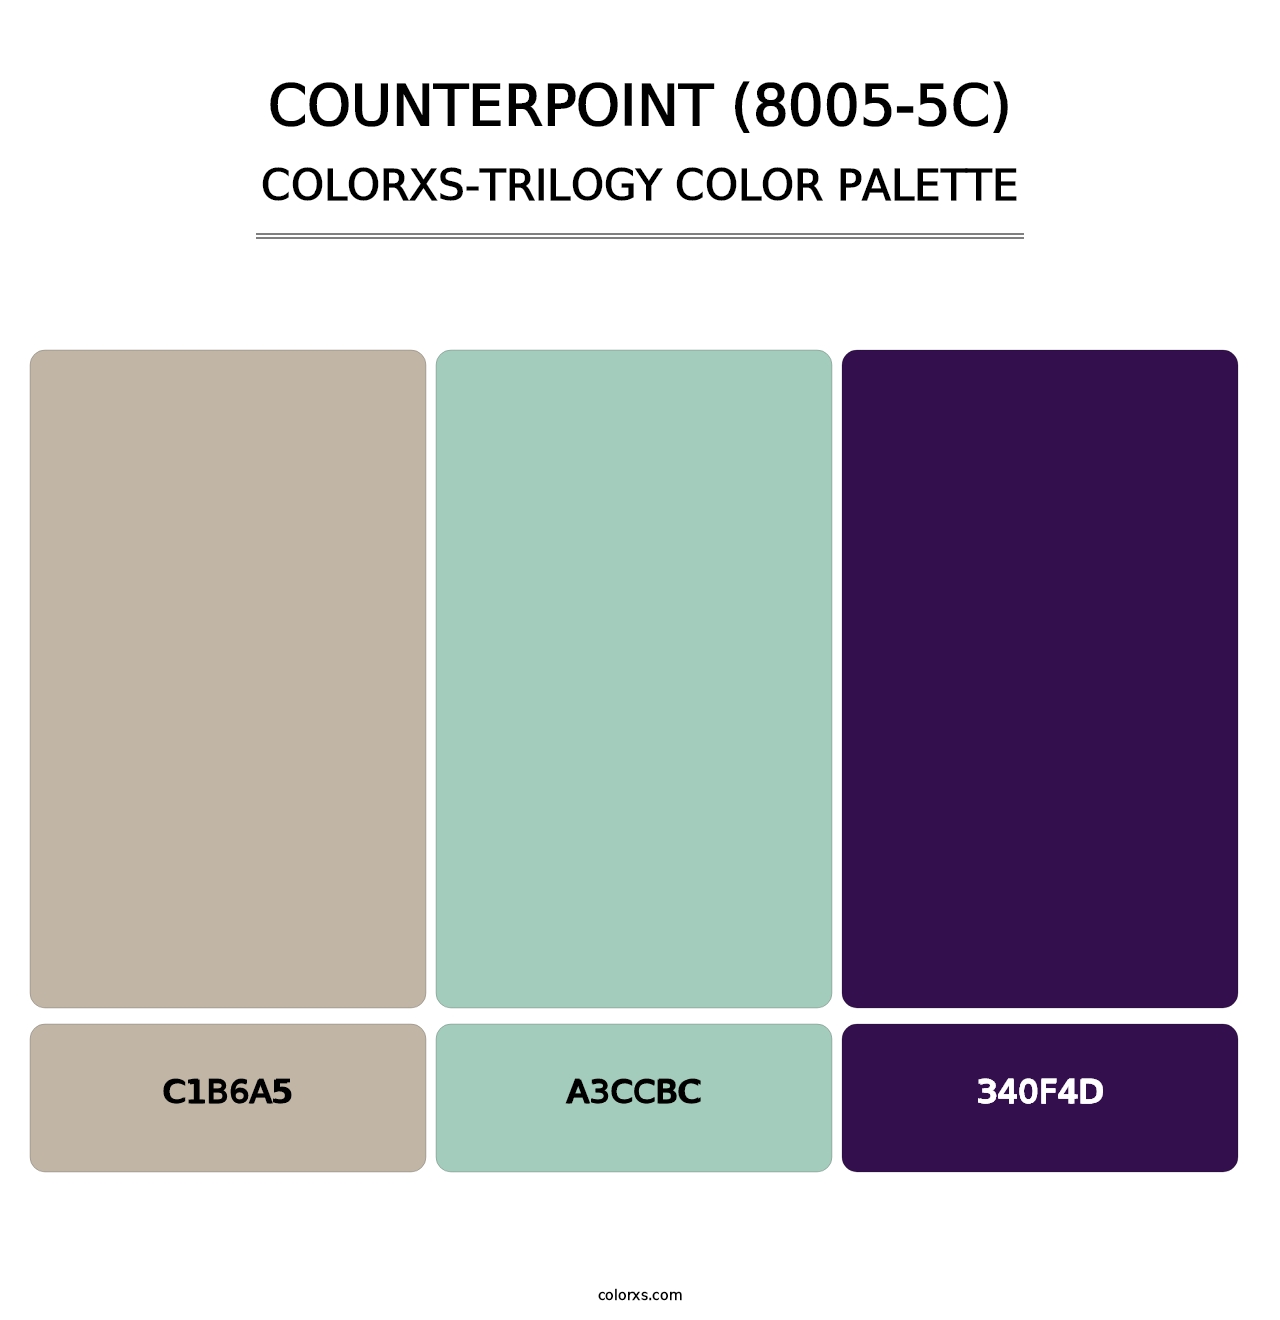 Counterpoint (8005-5C) - Colorxs Trilogy Palette